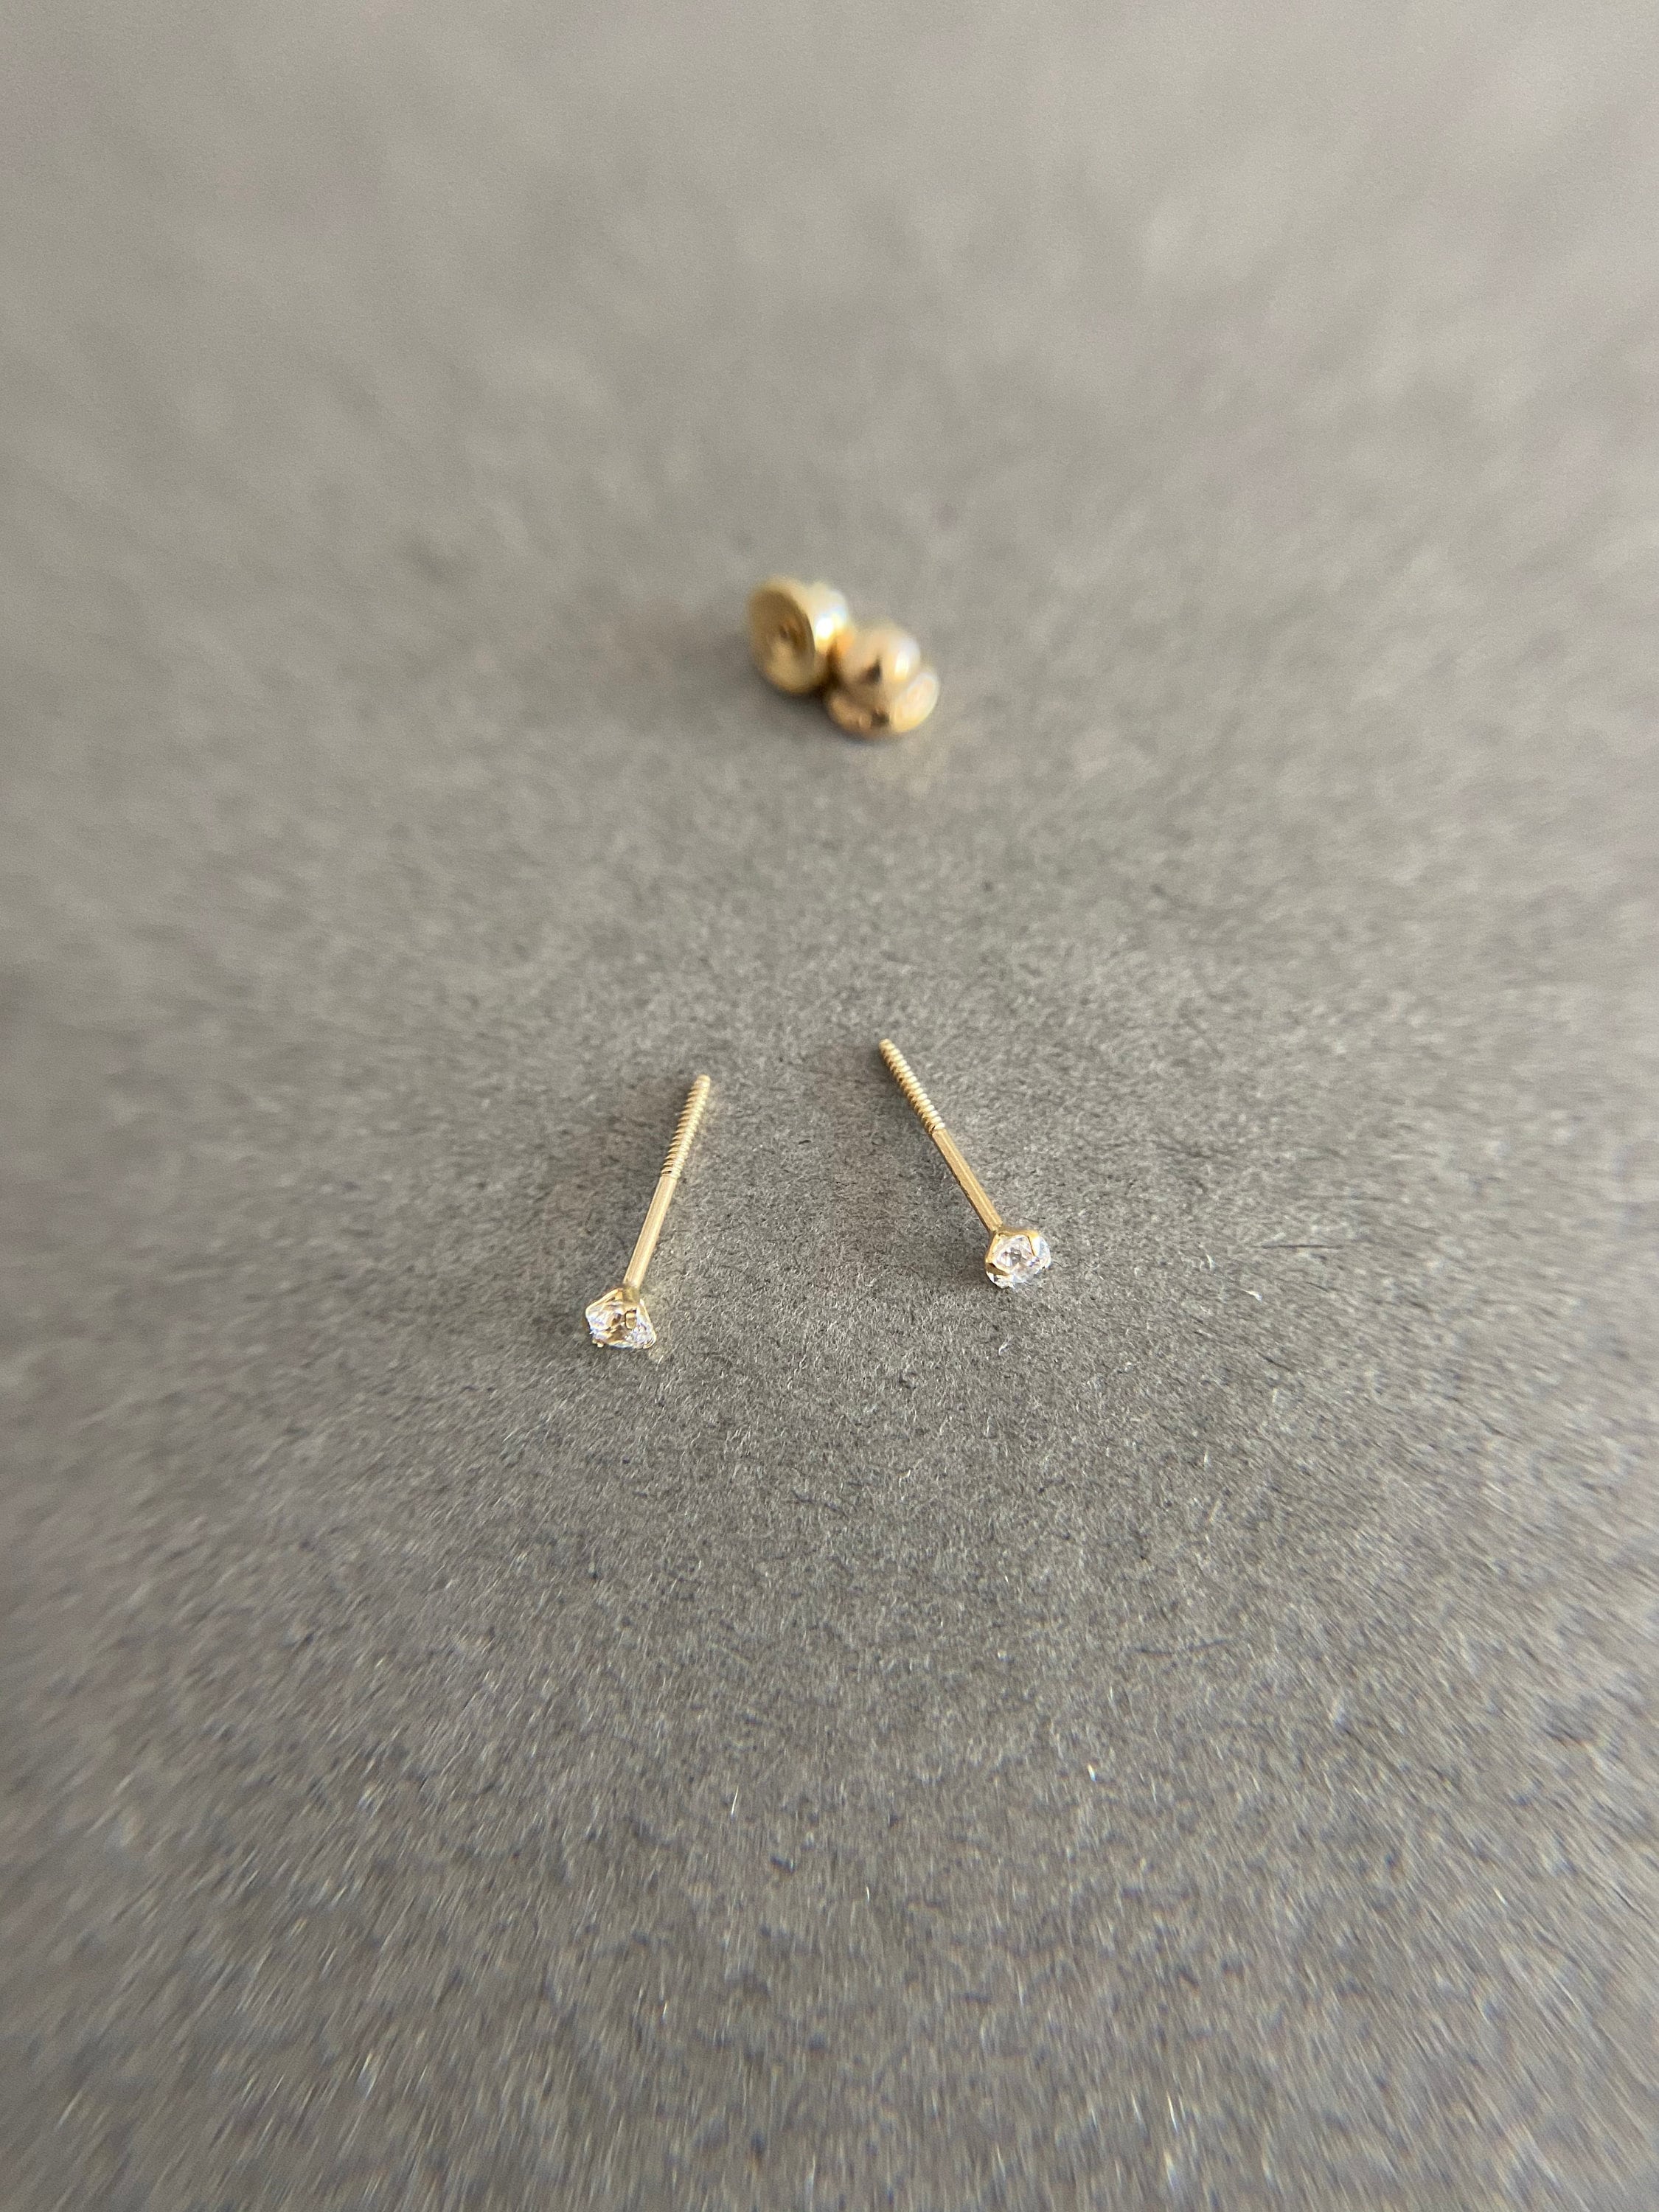 Teeny Tiny Heart Studs, 3mm Clear CZ Baby/Children's Earrings, Screw Back - 14K Gold